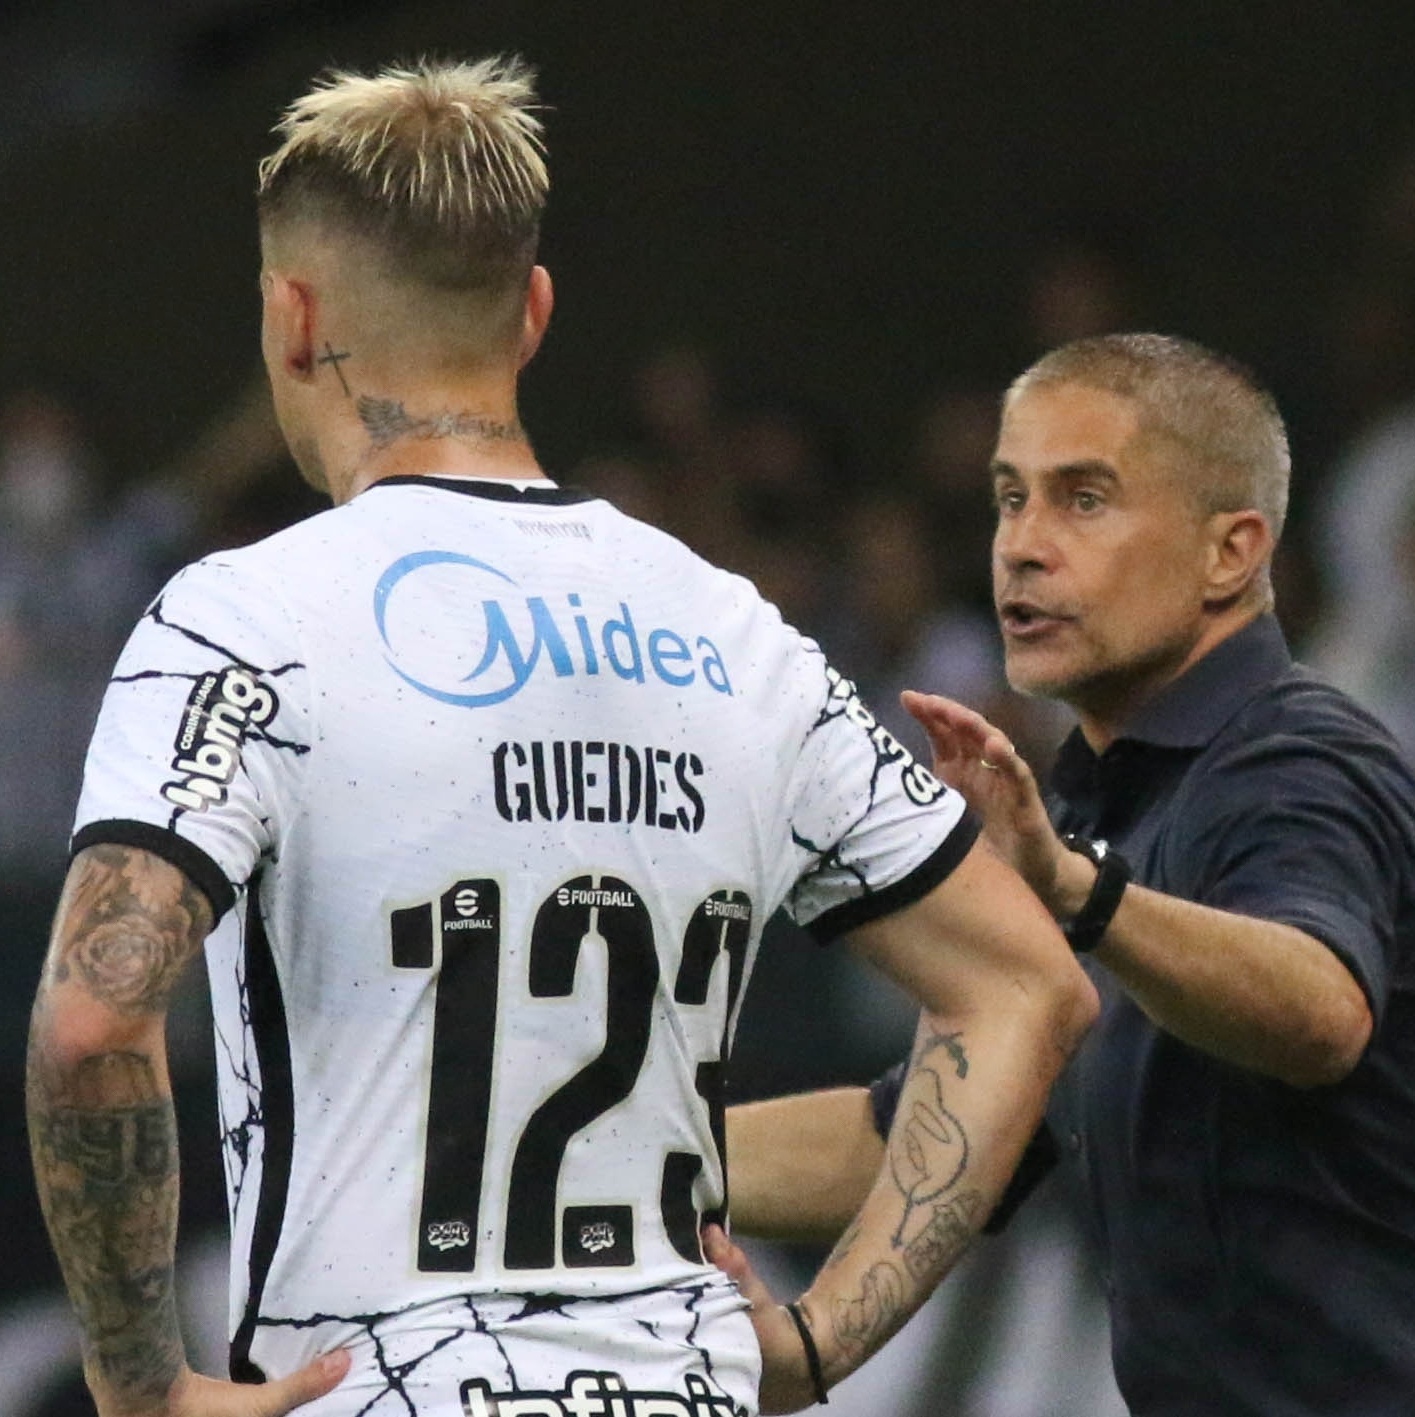 Resultado do jogo do Corinthians: Róger Guedes marca na estreia (7/9)